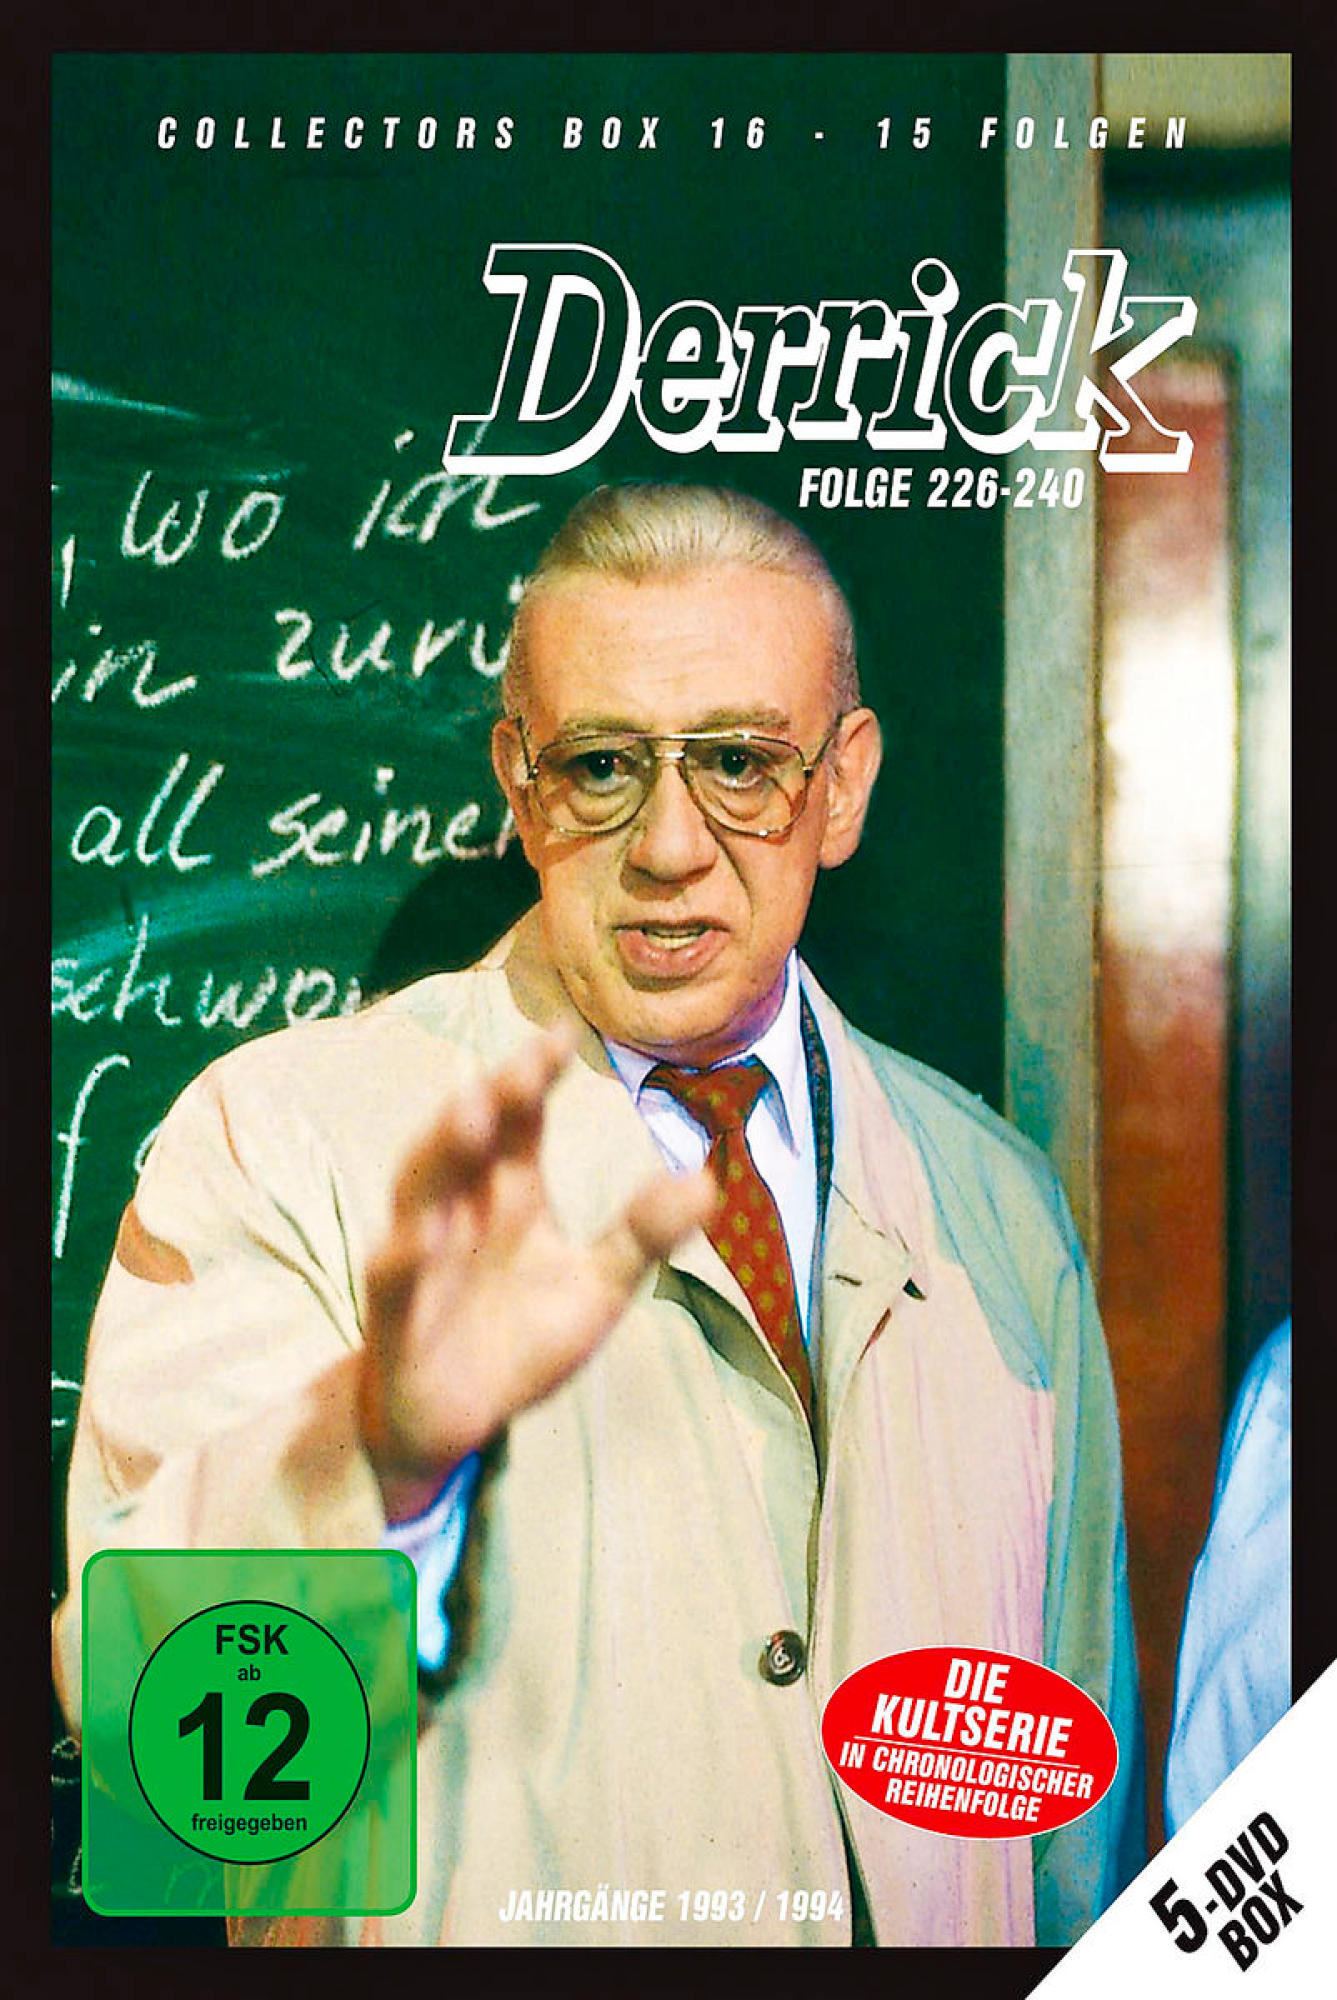 Box 16 Derrick: DVD (Folge Collector’s 226-240) Vol.